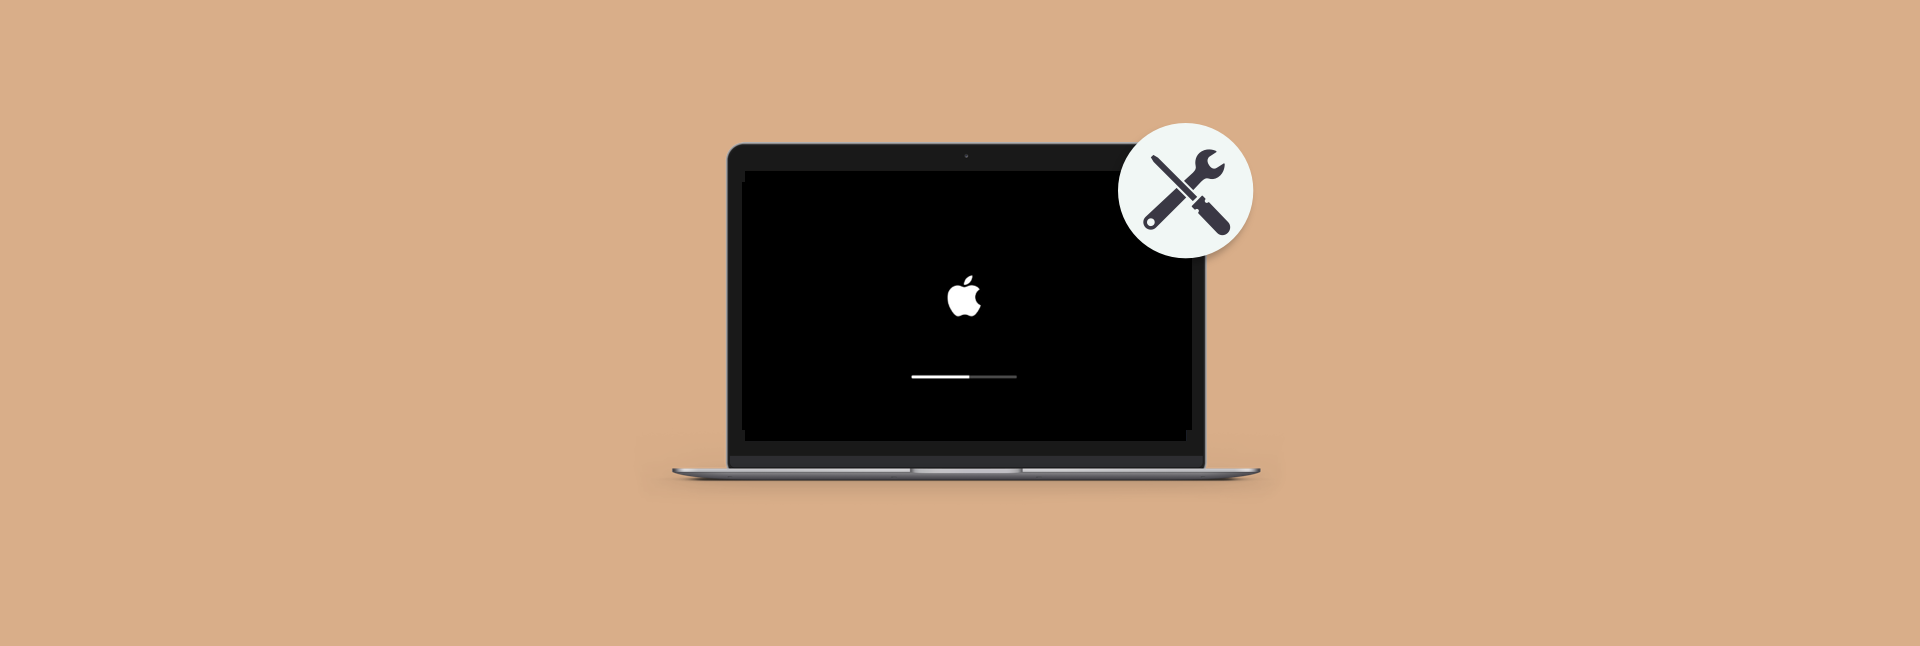 Macbook pro wont go past apple logo nike jordan 1 retro